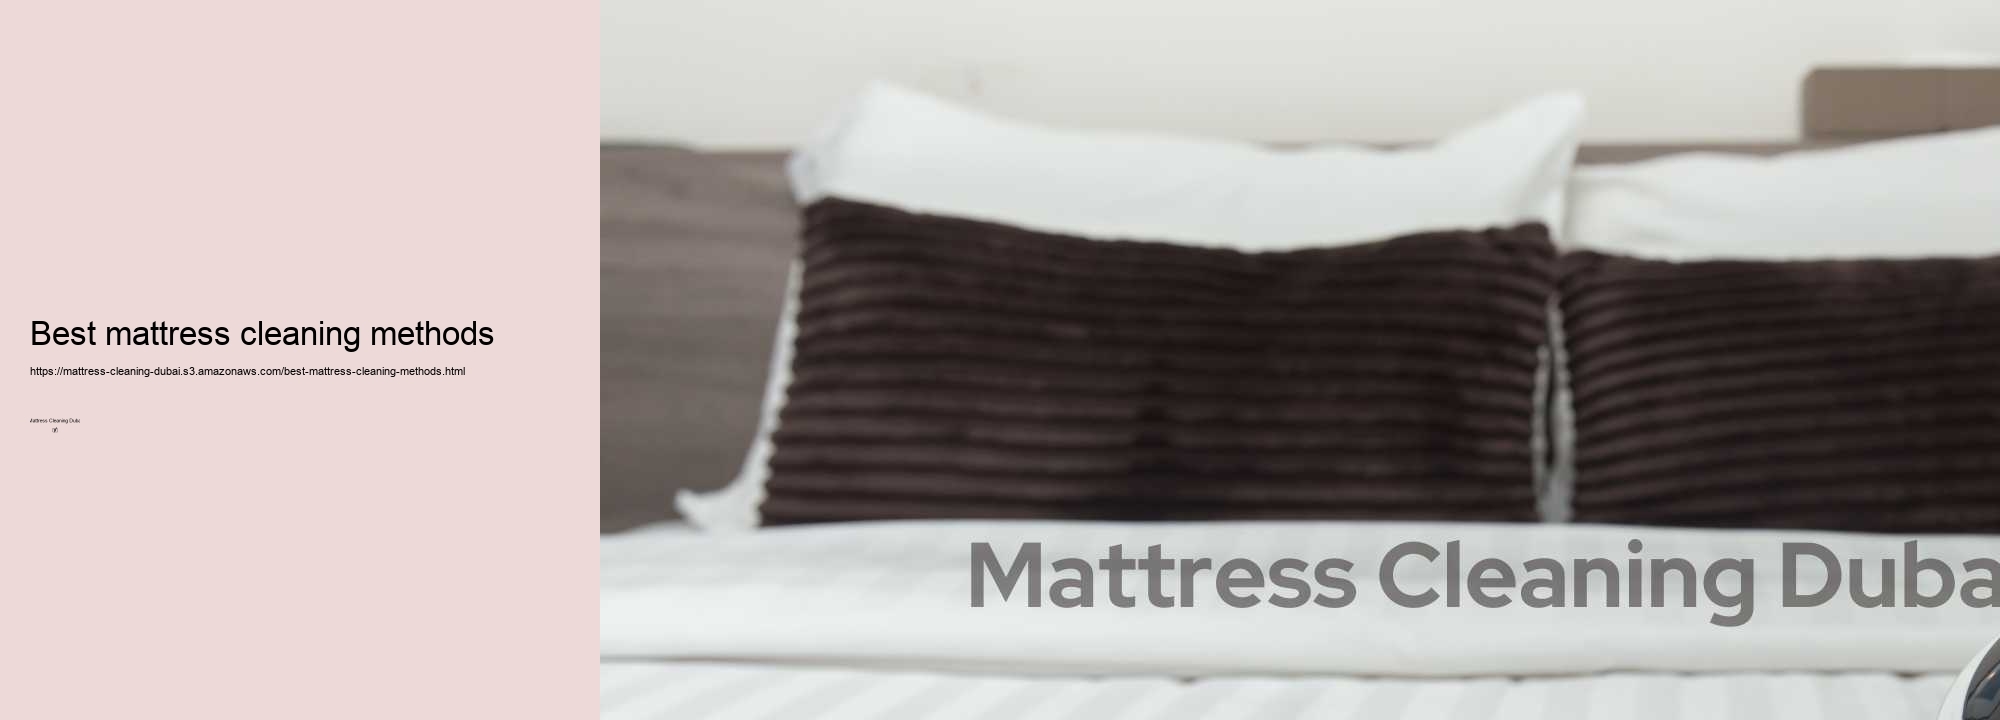 Best mattress cleaning methods